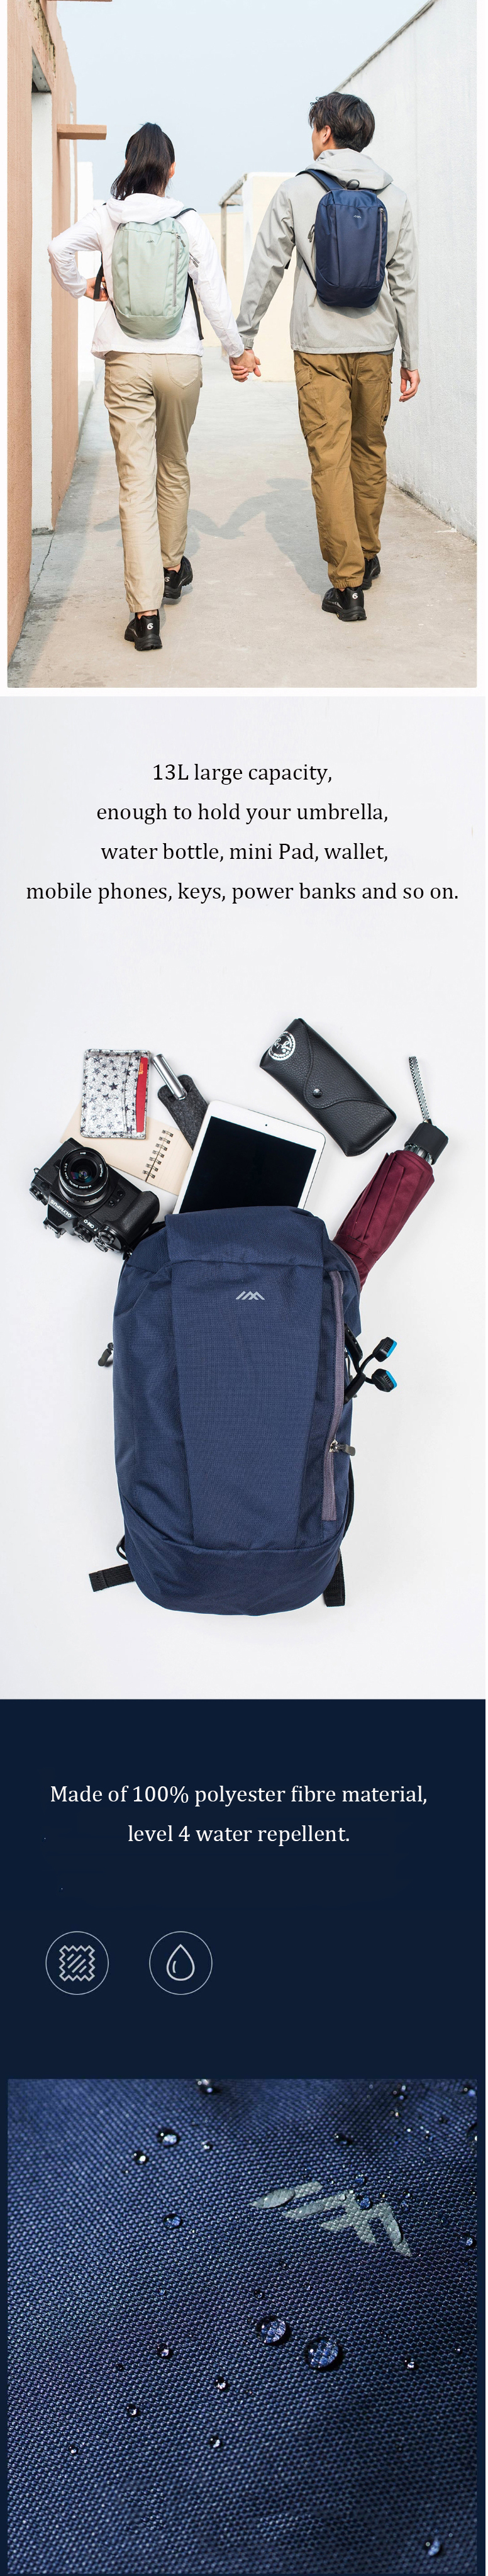 Xiaomi-Extrek-13L-Folding-Backpack-Waterproof-Camping-Travel-Bag-Men-Women-Sports-Bag-1575034-2